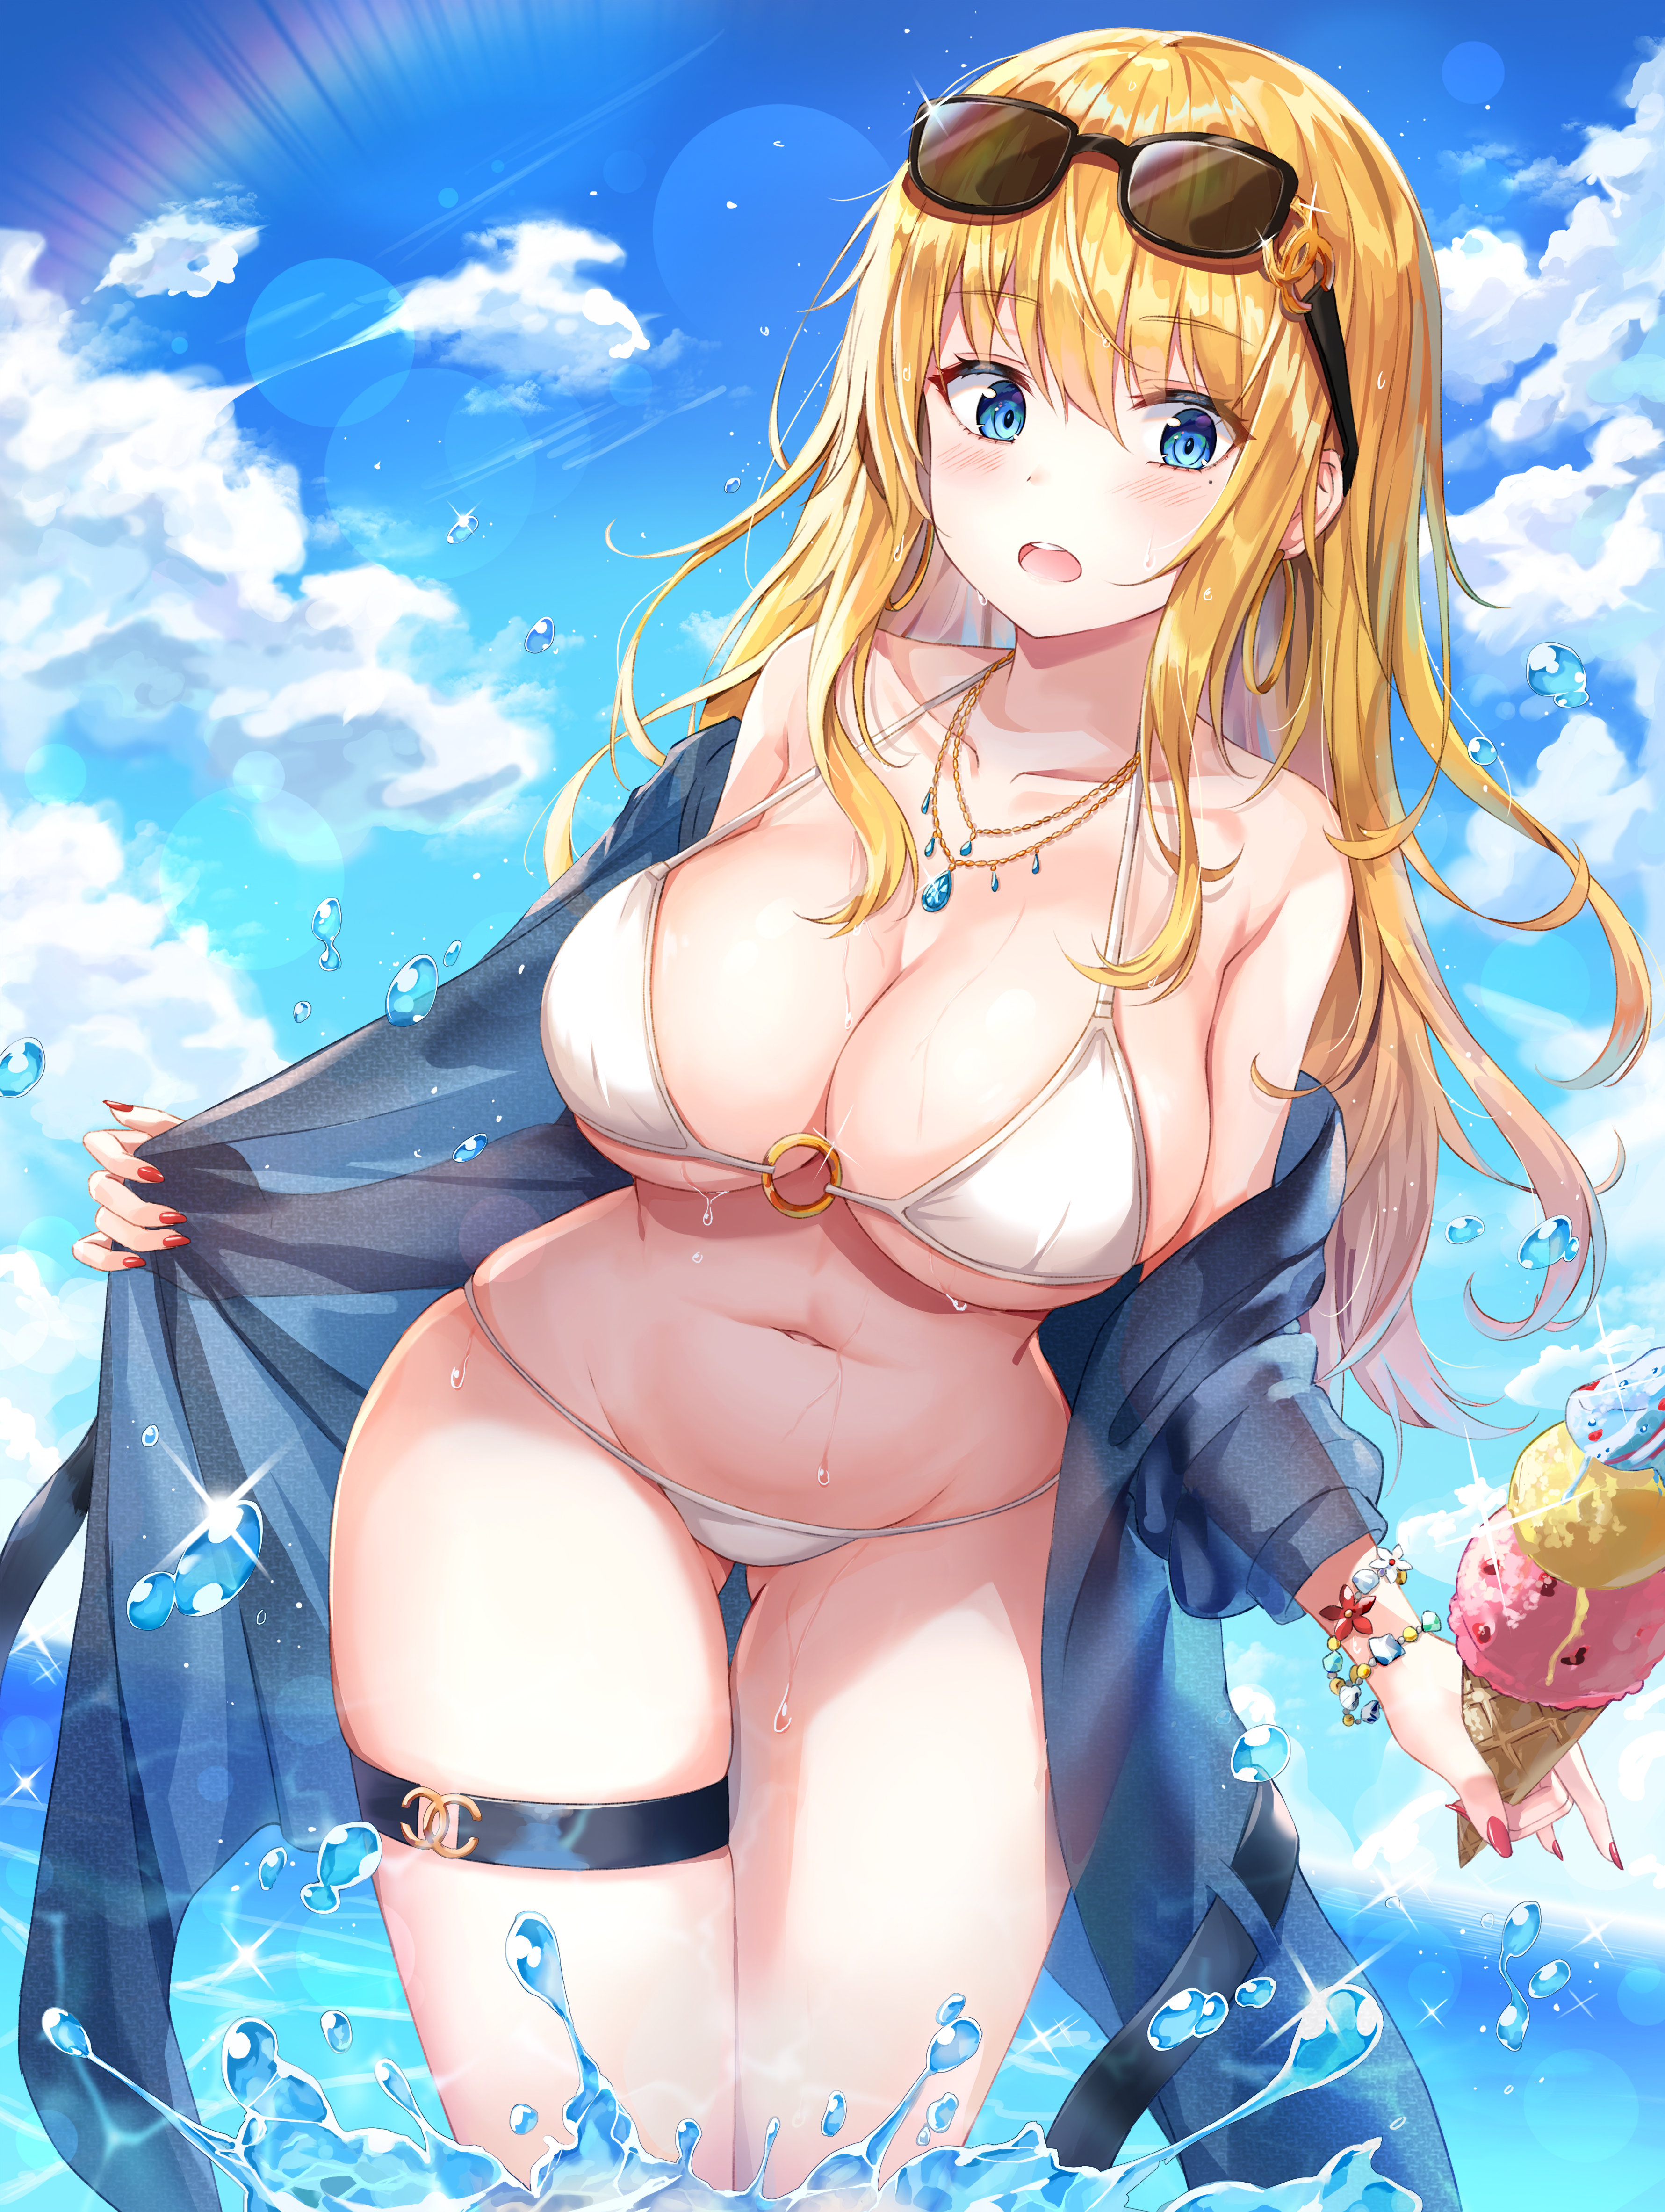 Anime 3561x4730 anime anime girls Lkeris big boobs bikini clouds sky blonde blue eyes sunglasses ice cream water standing in water